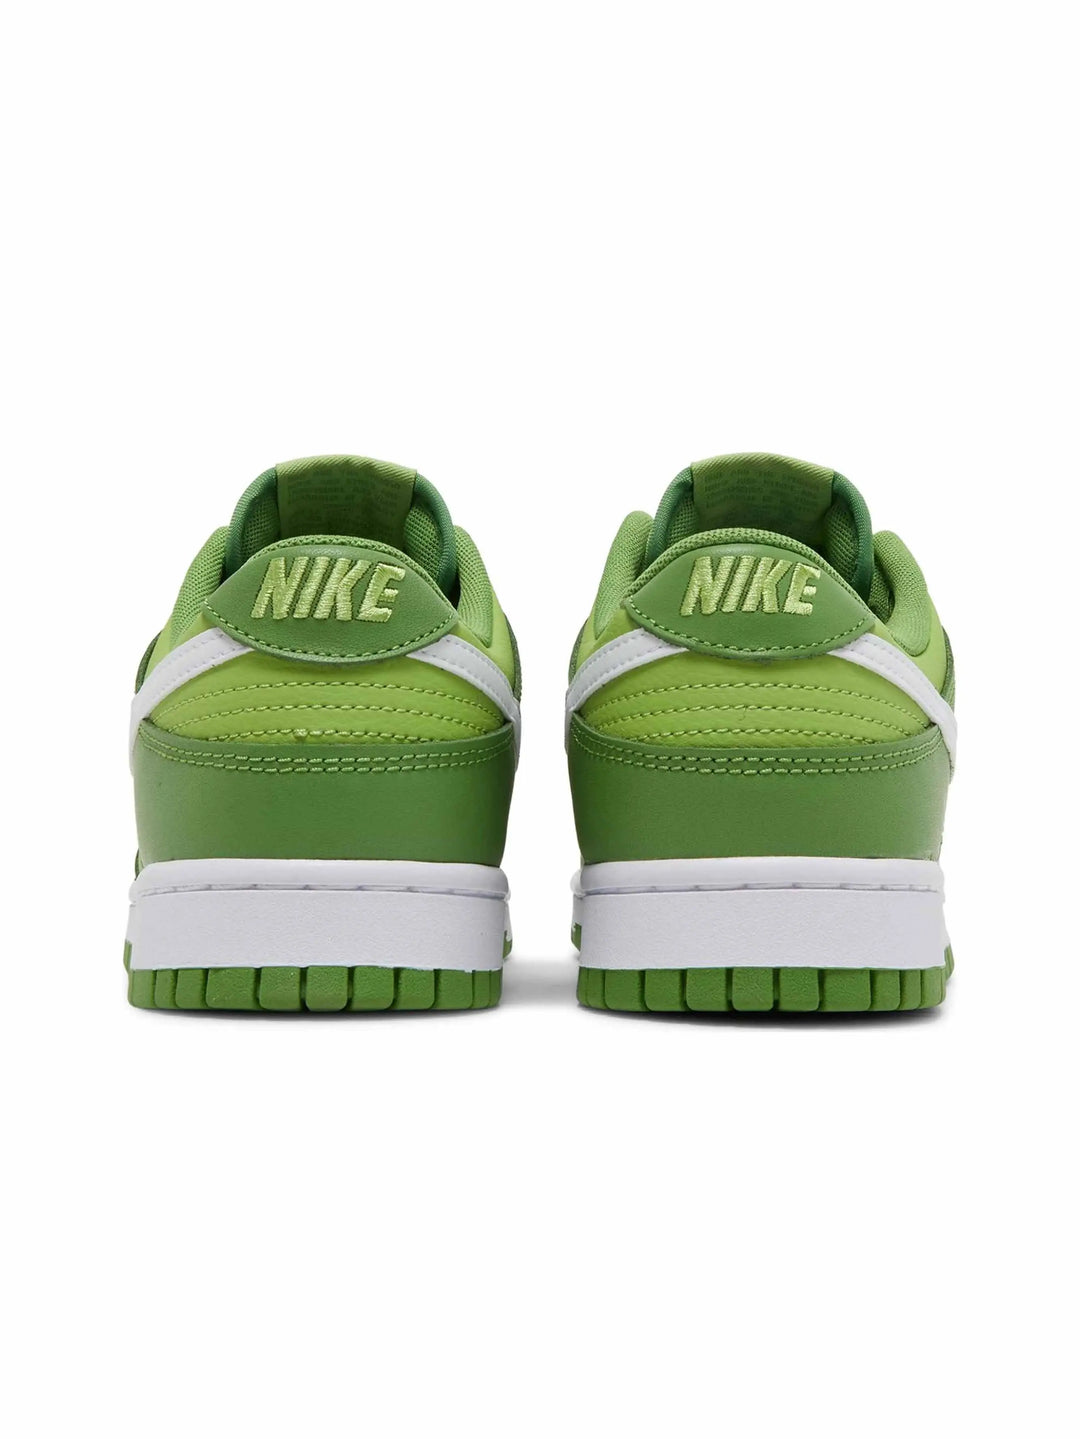 Nike Dunk Low Chlorophyll - Prior